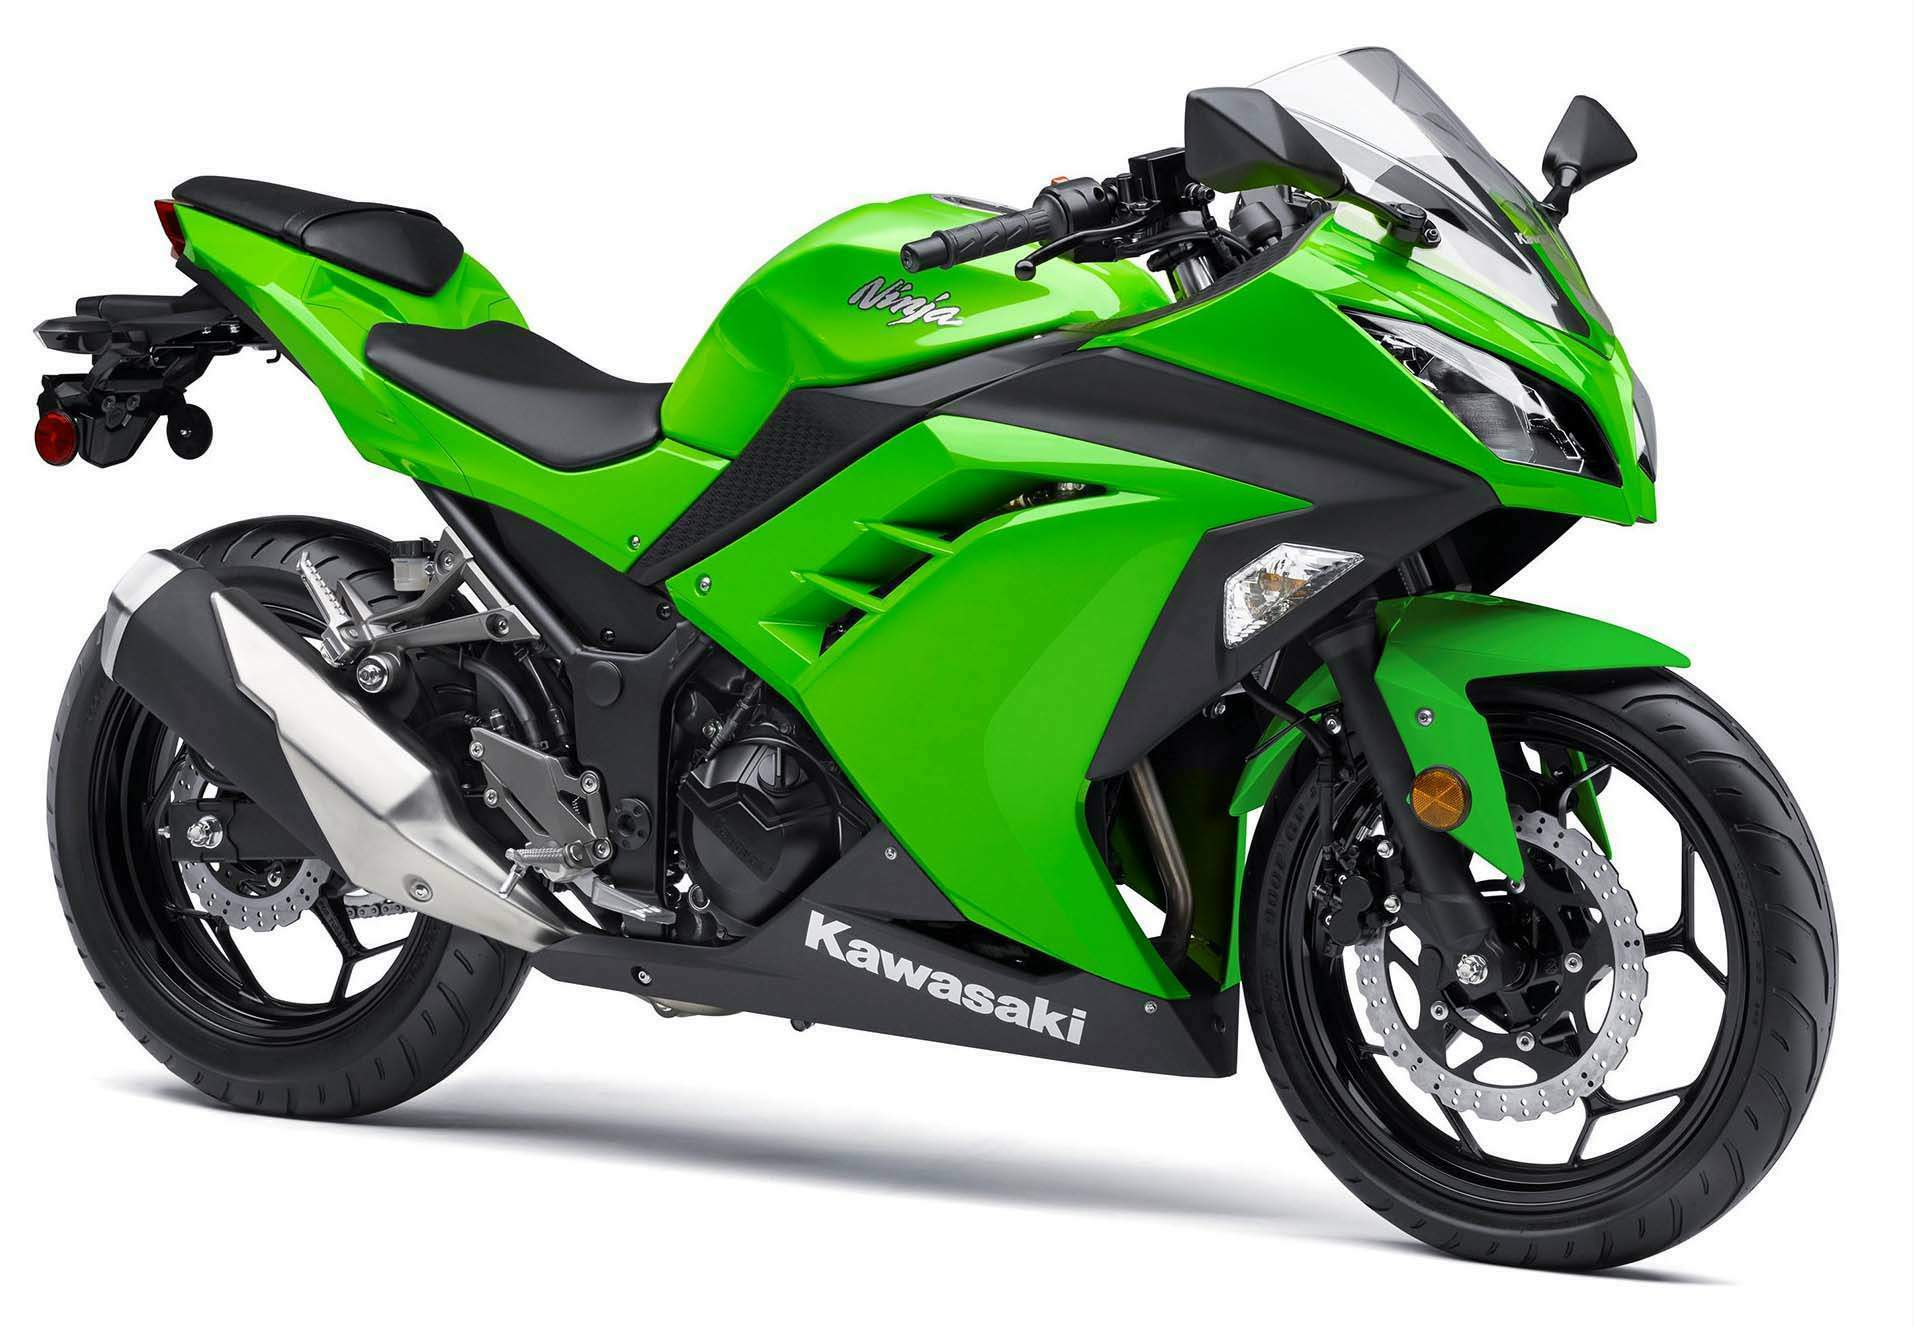 Kawasaki Ninja 300 technical specifications